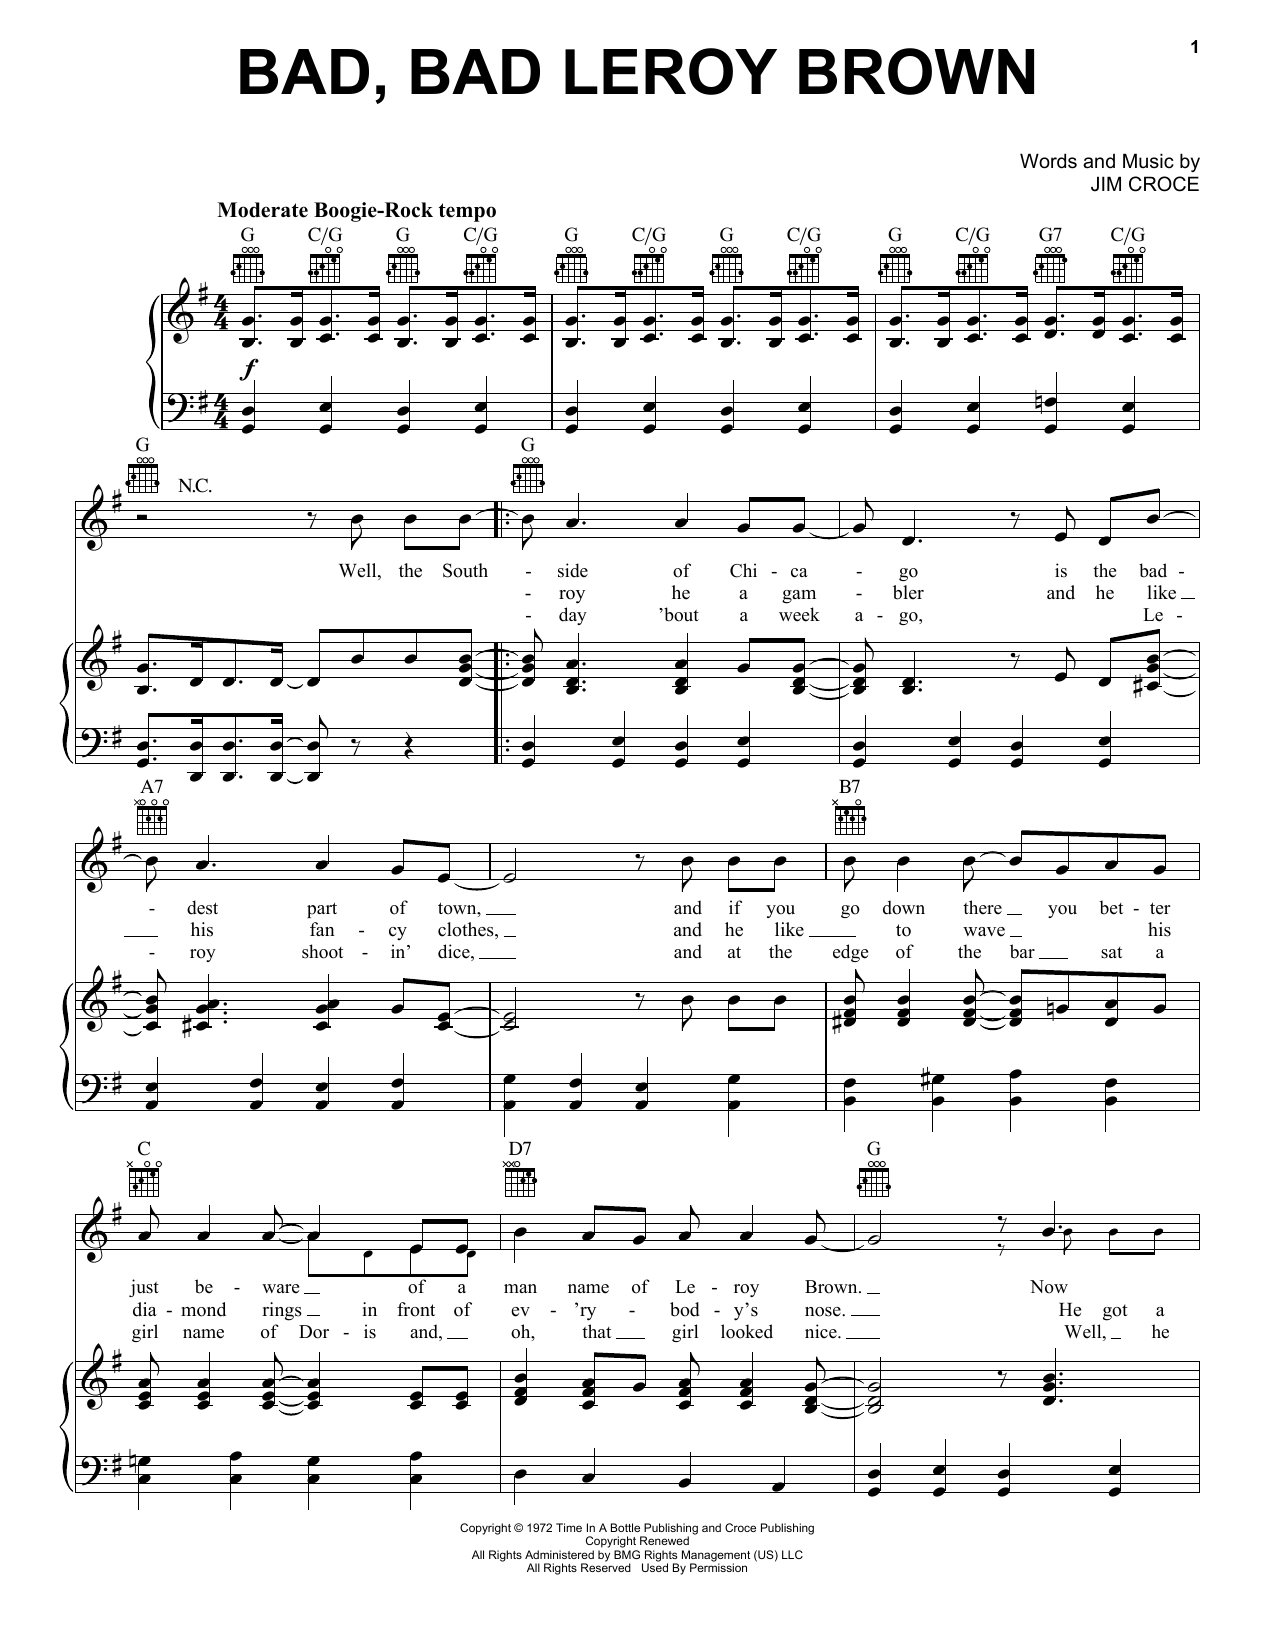 Jim Croce Bad, Bad Leroy Brown Sheet Music Notes & Chords for Violin - Download or Print PDF